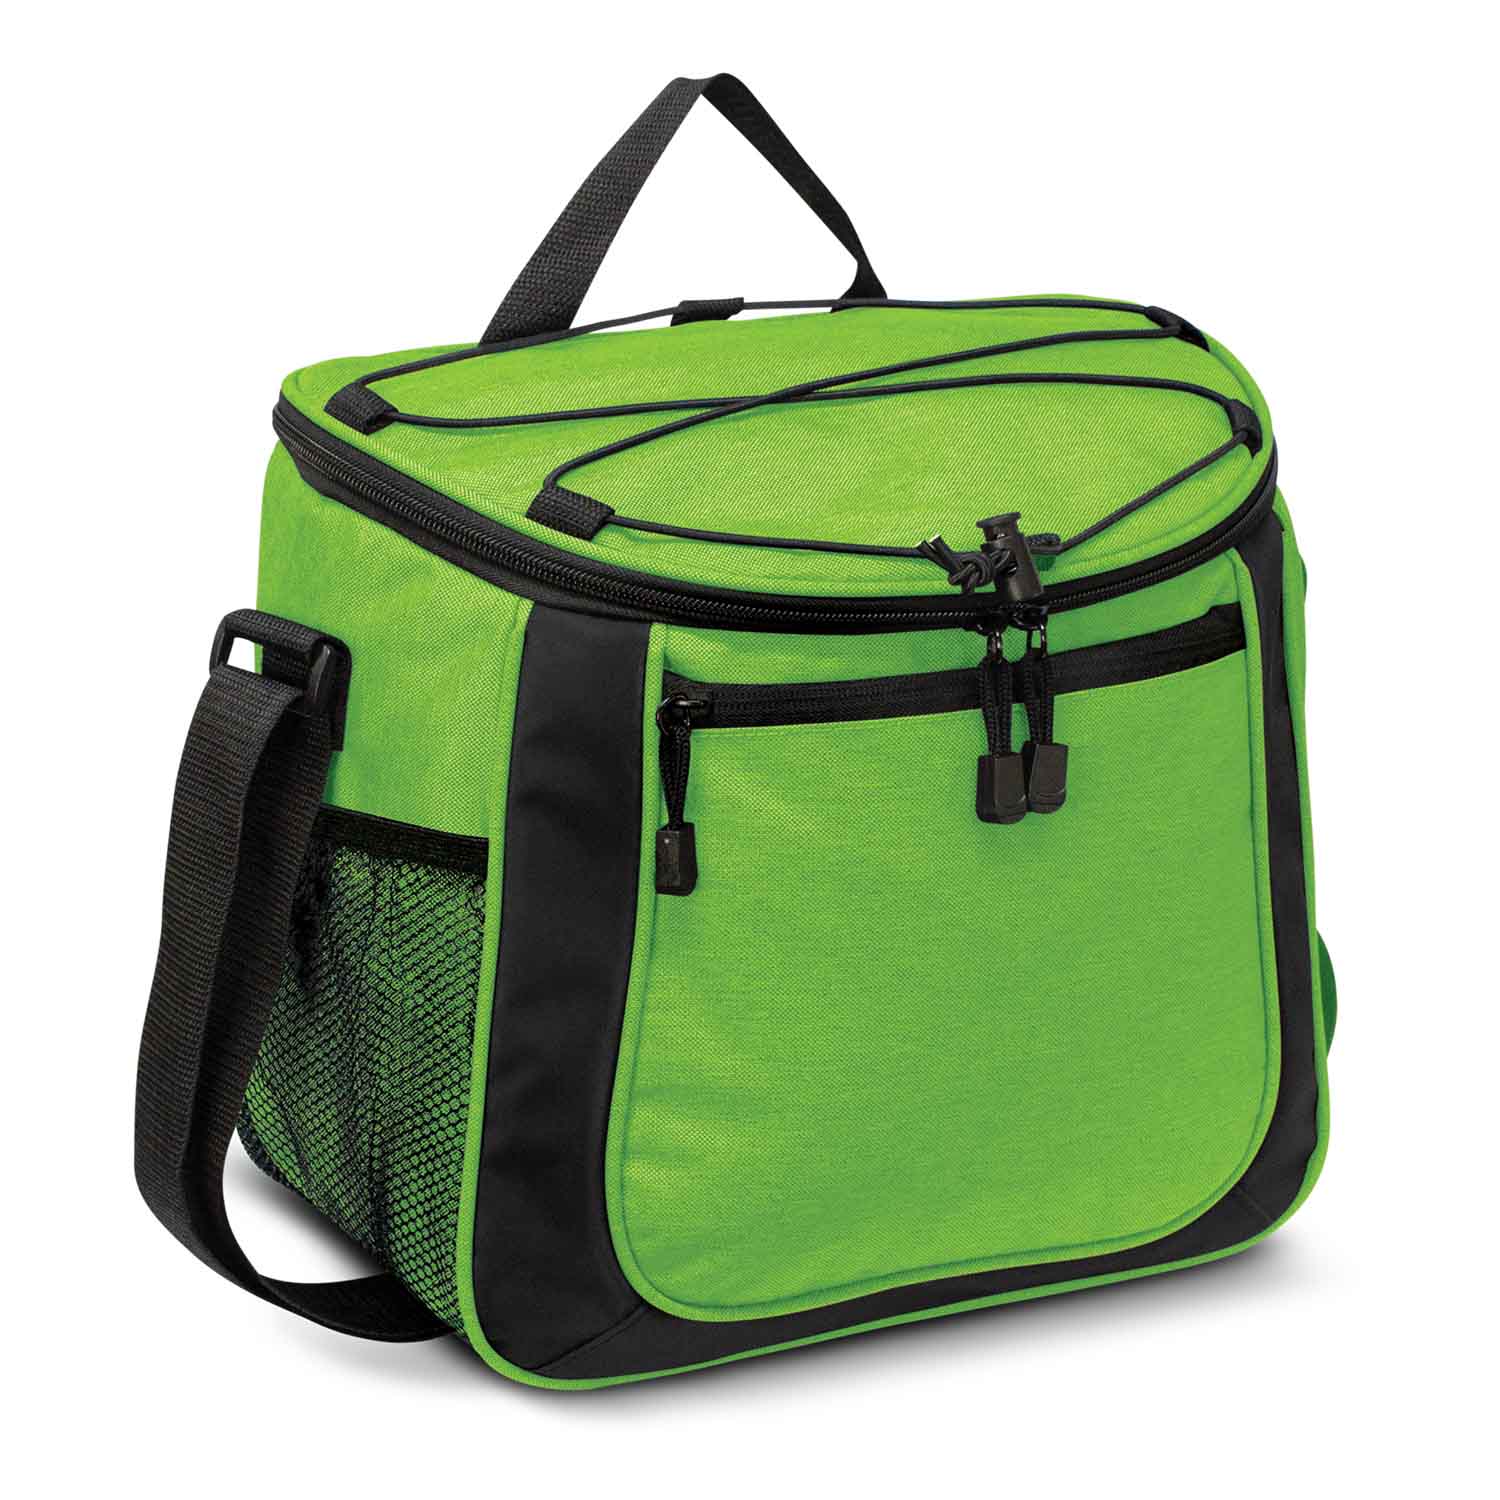 Green Aspiring Cooler Bags Online in Australia